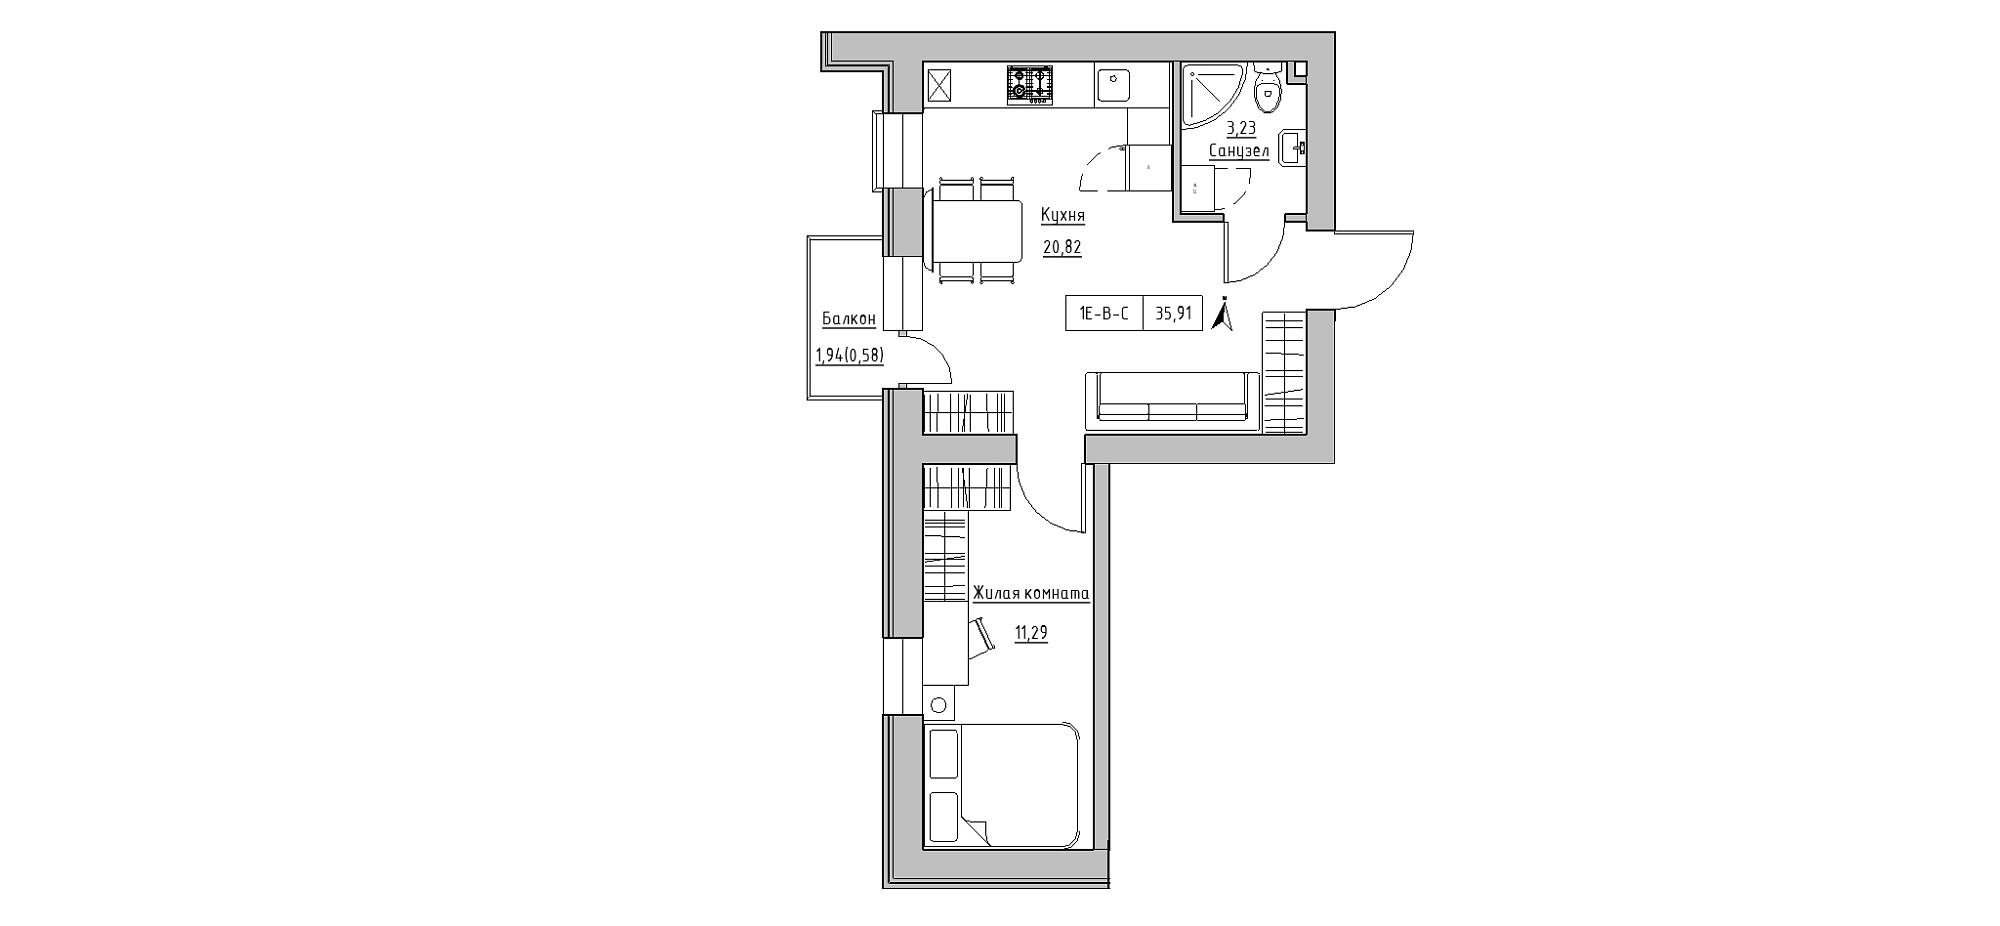 Planning 1-rm flats area 35.91m2, KS-020-03/0009.